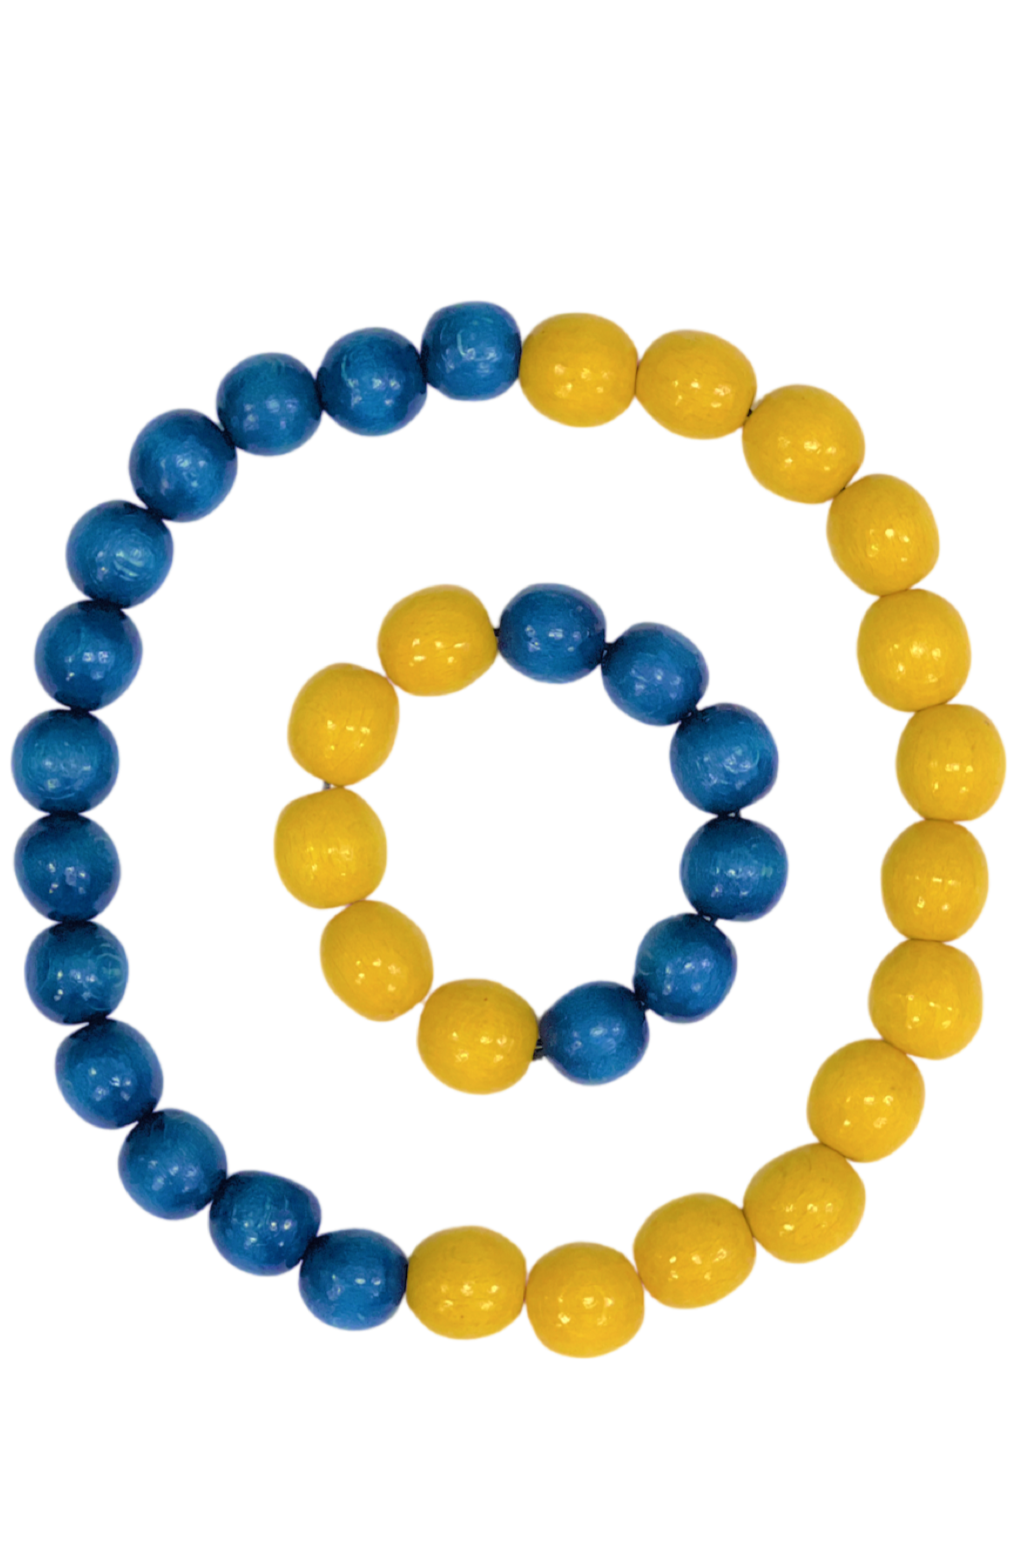 Artisan crafted jumbo wood-bead jewelry set. Blue and yellow